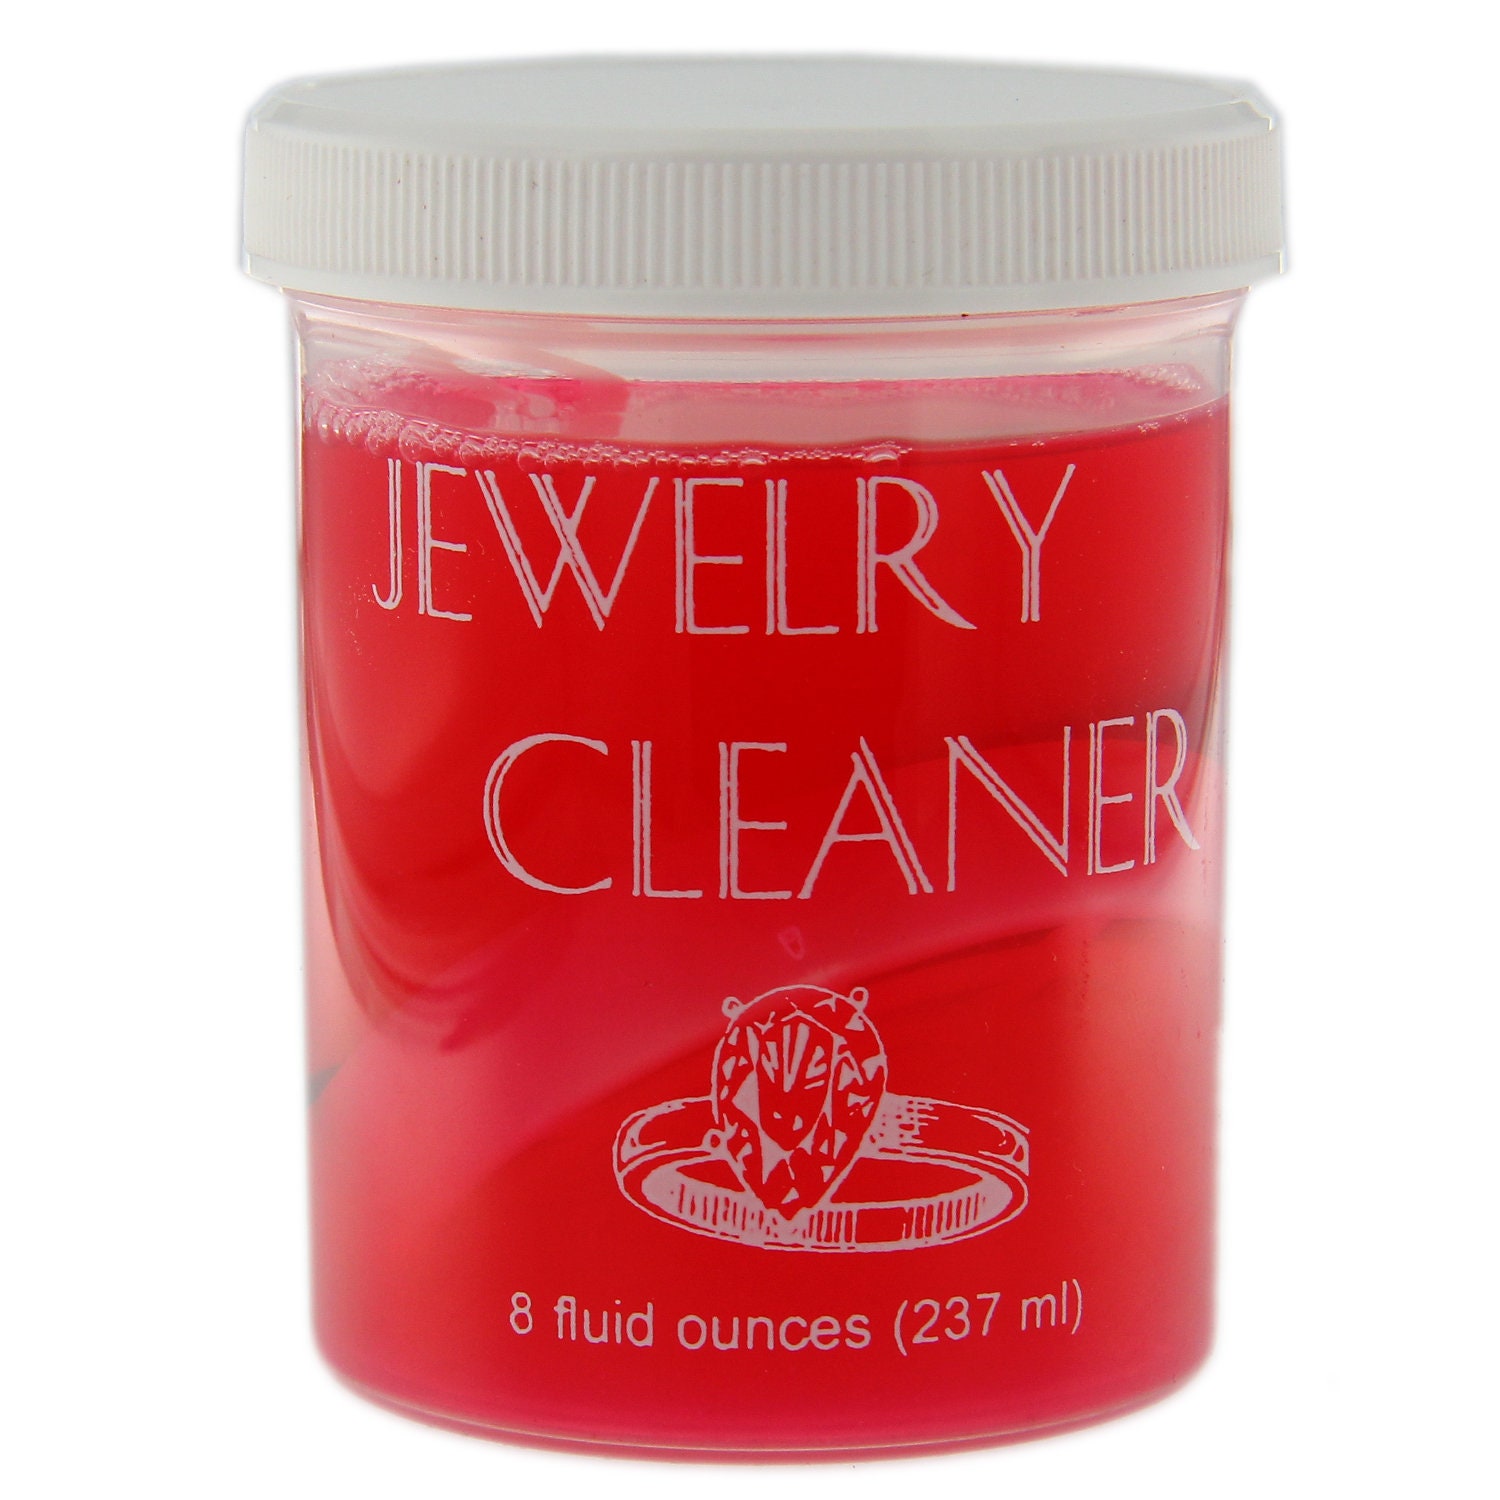 Jewelry Cleaner Jar